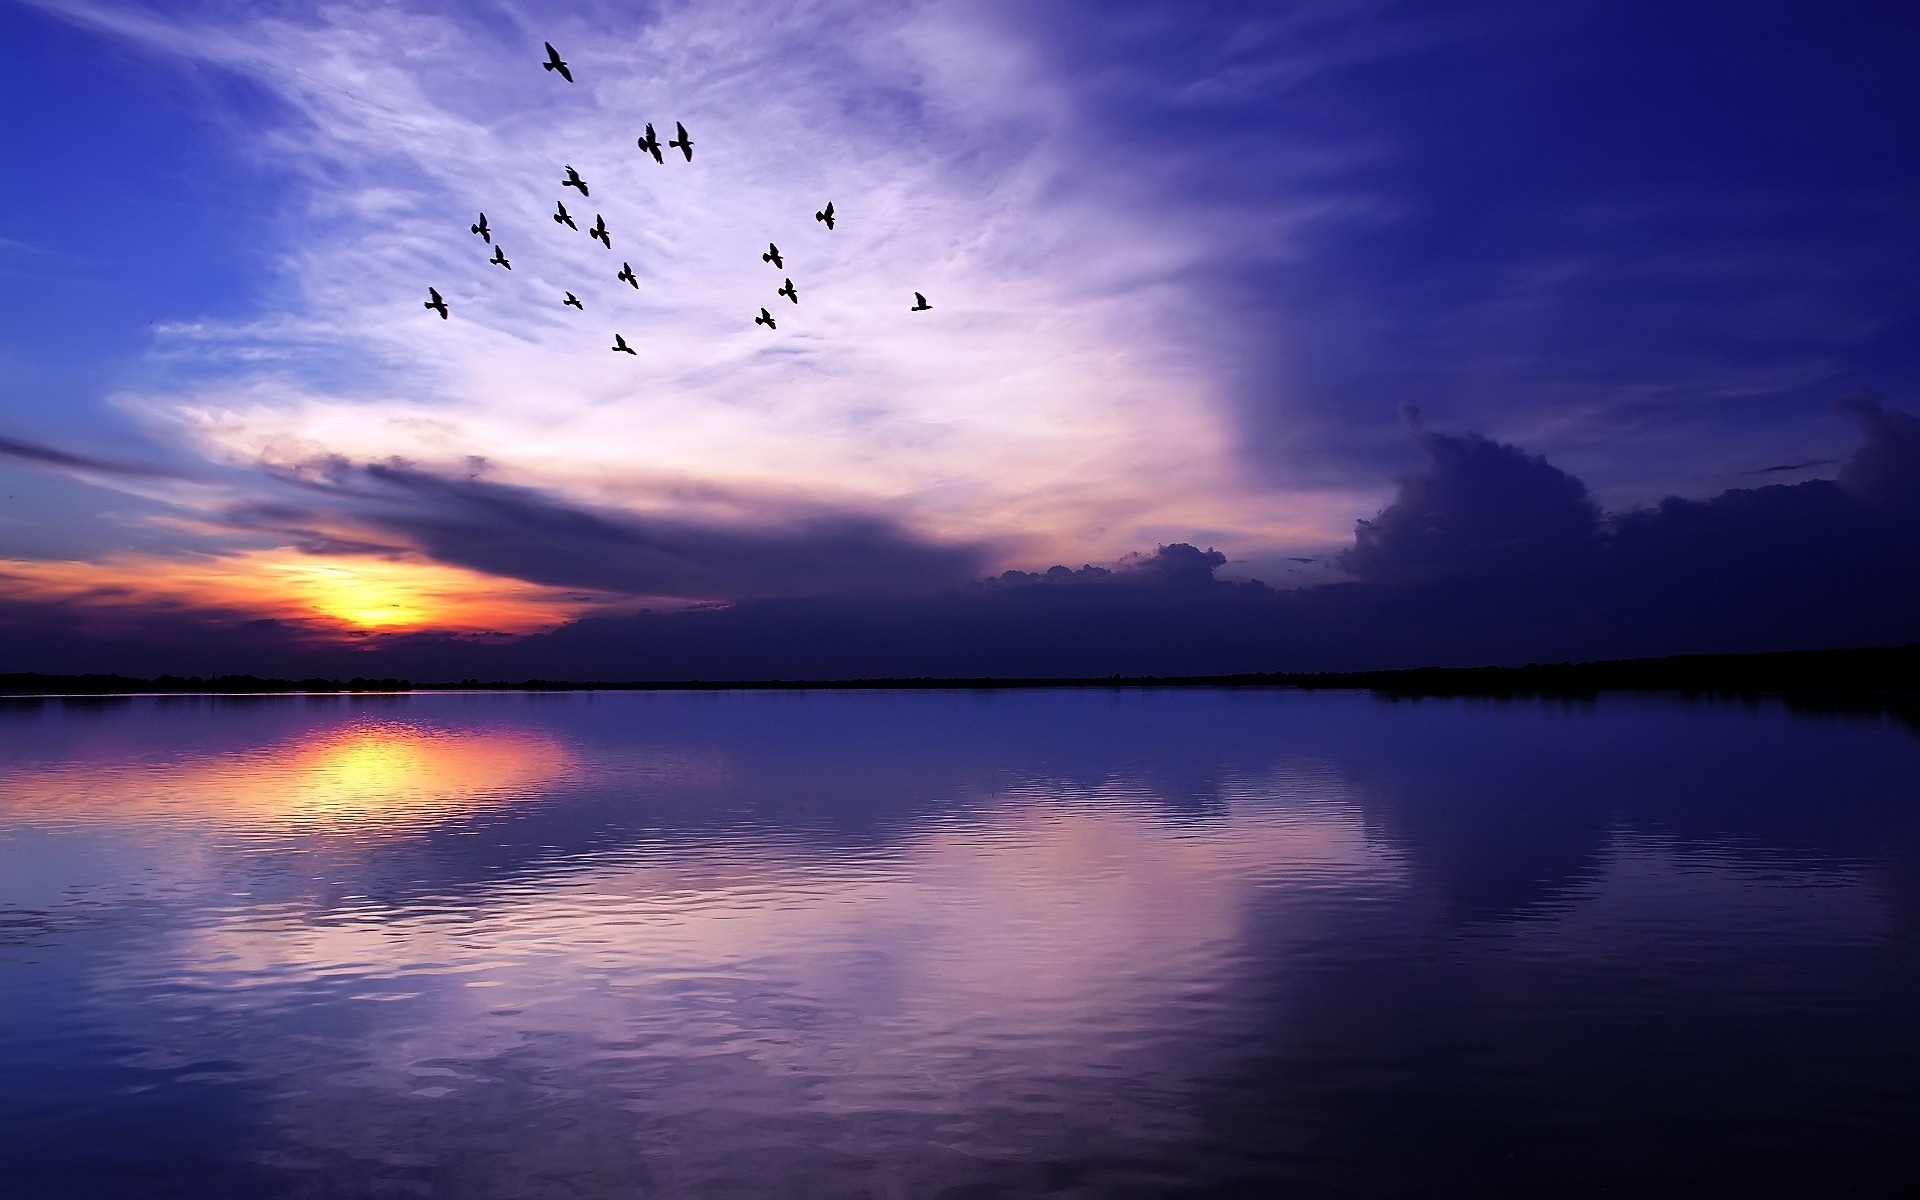 Flock of birds flying over the lake